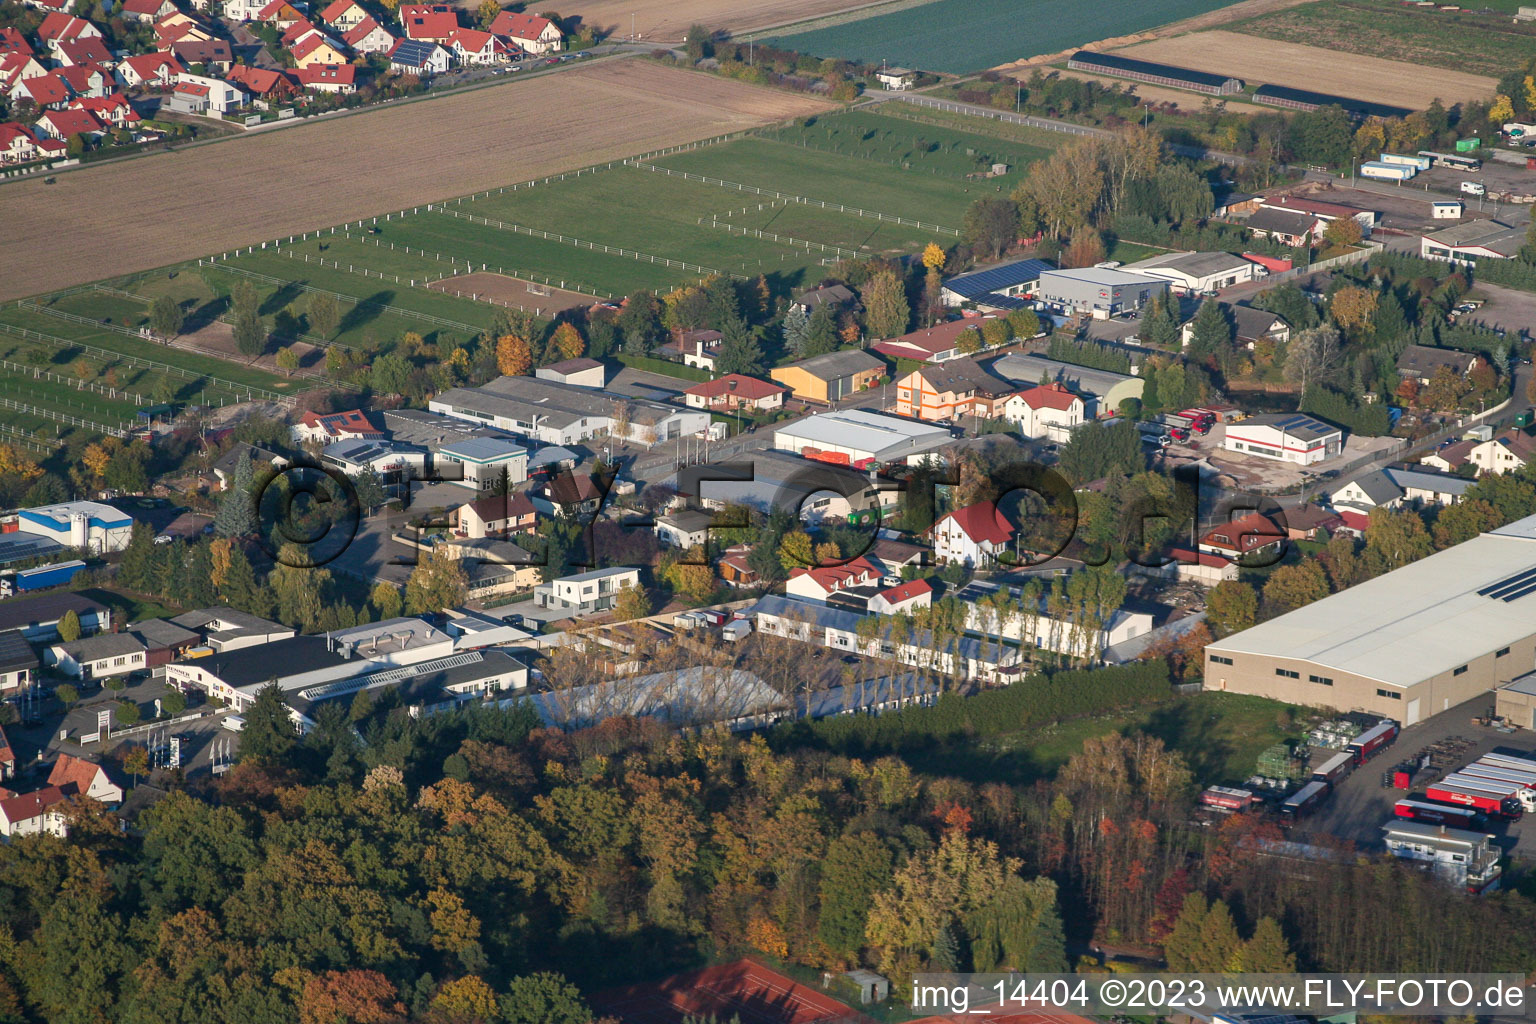 East industrial area in the district Herxheim in Herxheim bei Landau/Pfalz in the state Rhineland-Palatinate, Germany